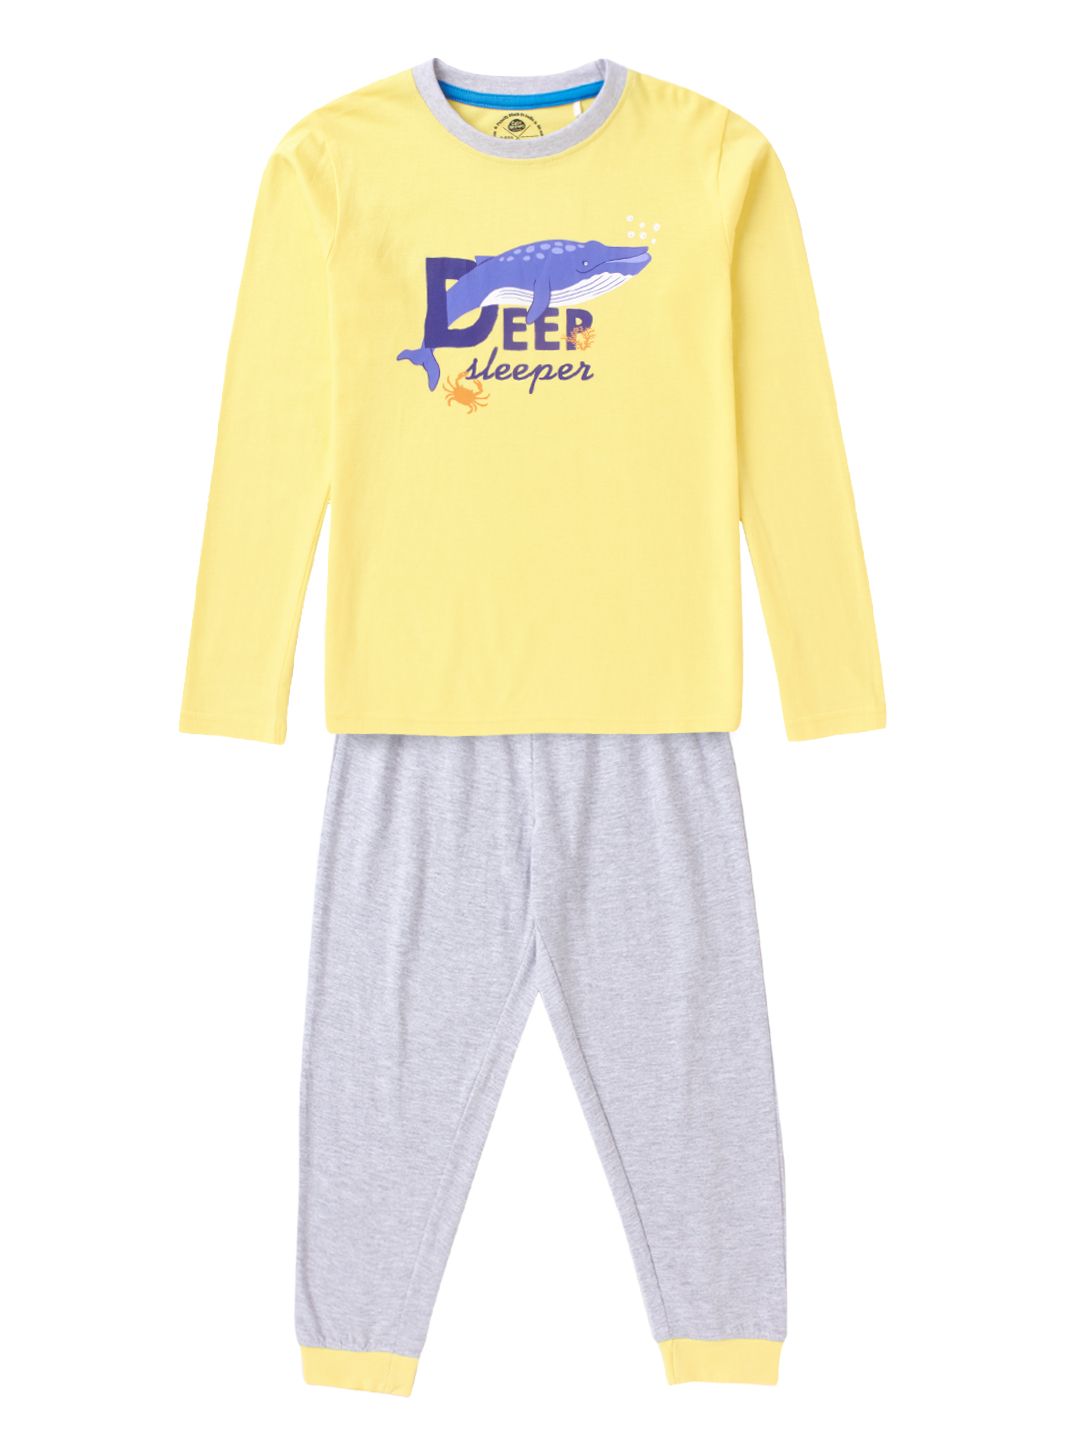 Boys Sleepwear Set - Yellow & Grey